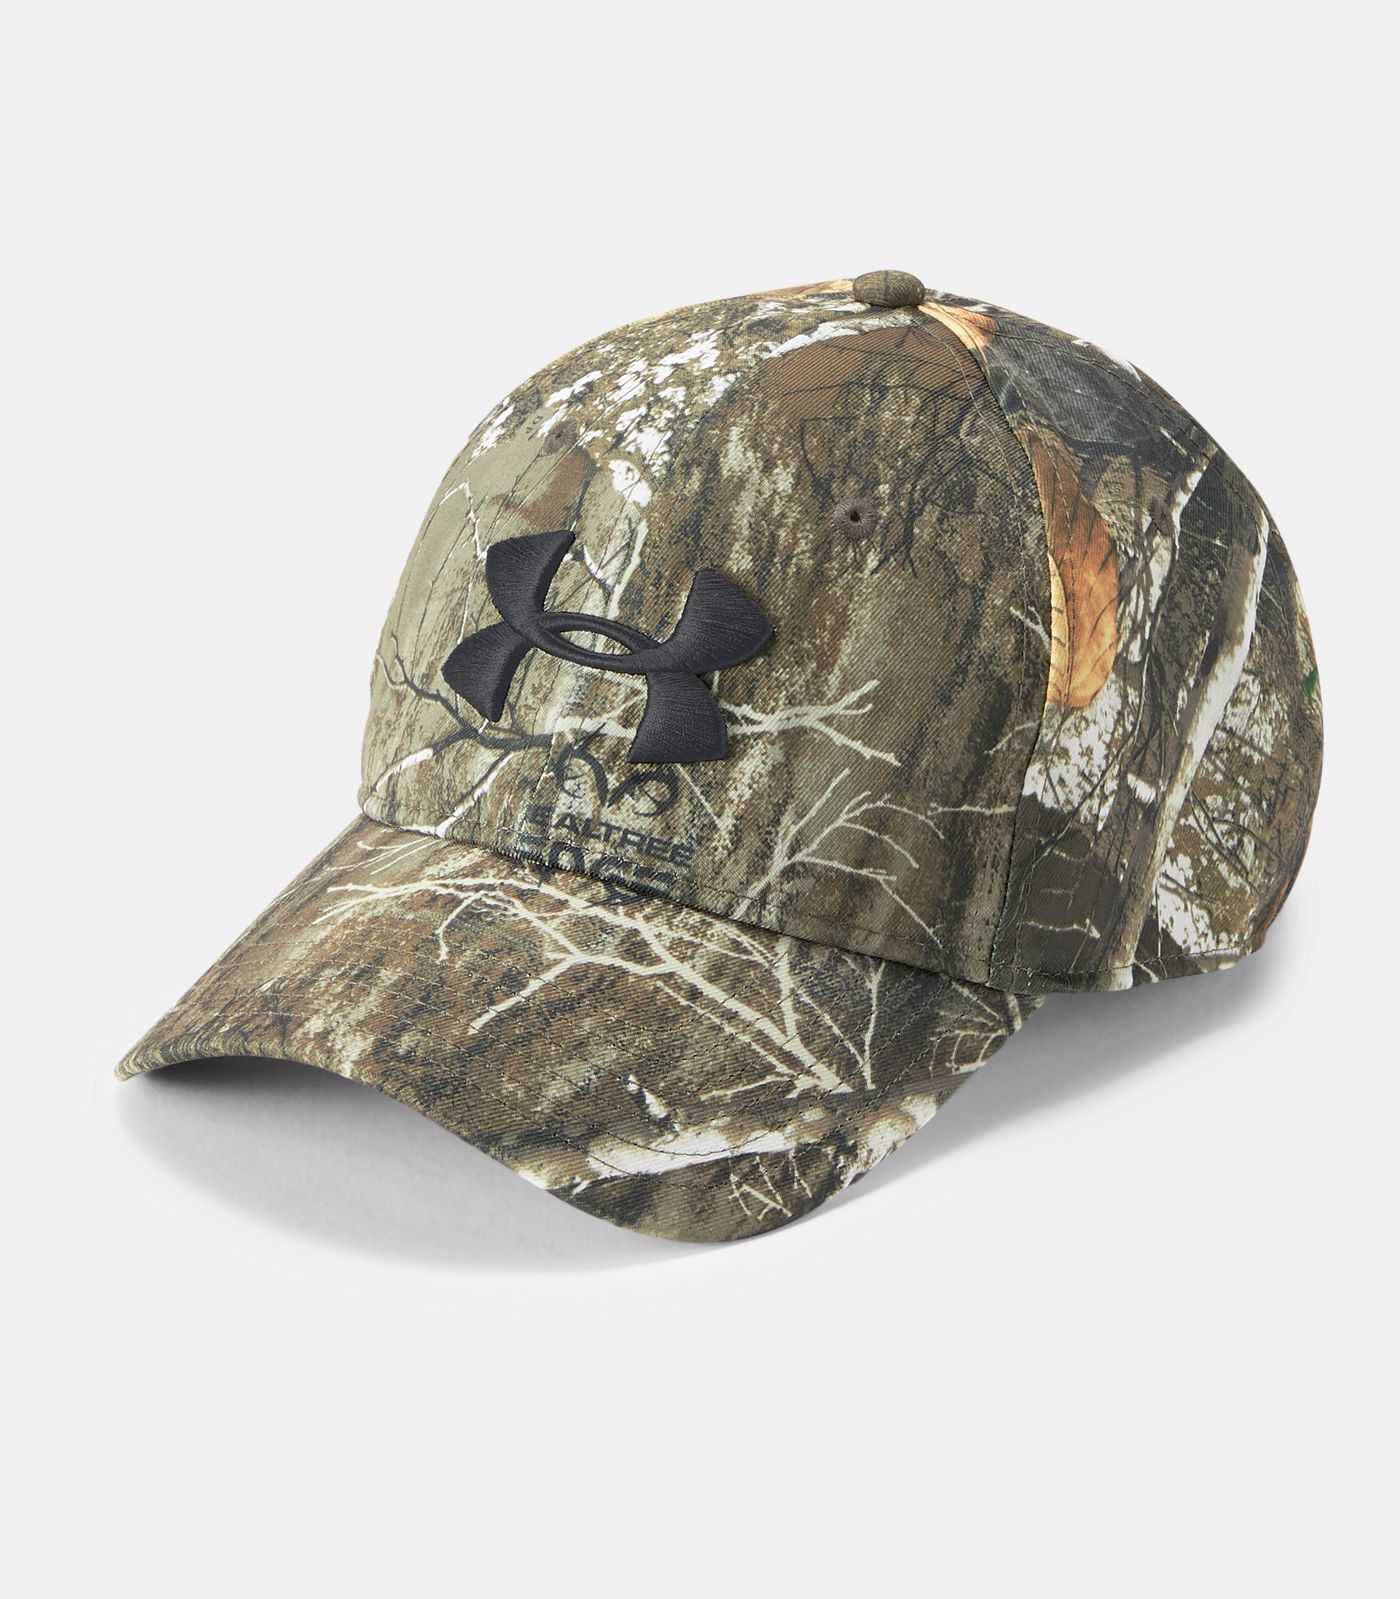 Under Armour Men's UA Hunt Camo Adjustable Hat Hunting